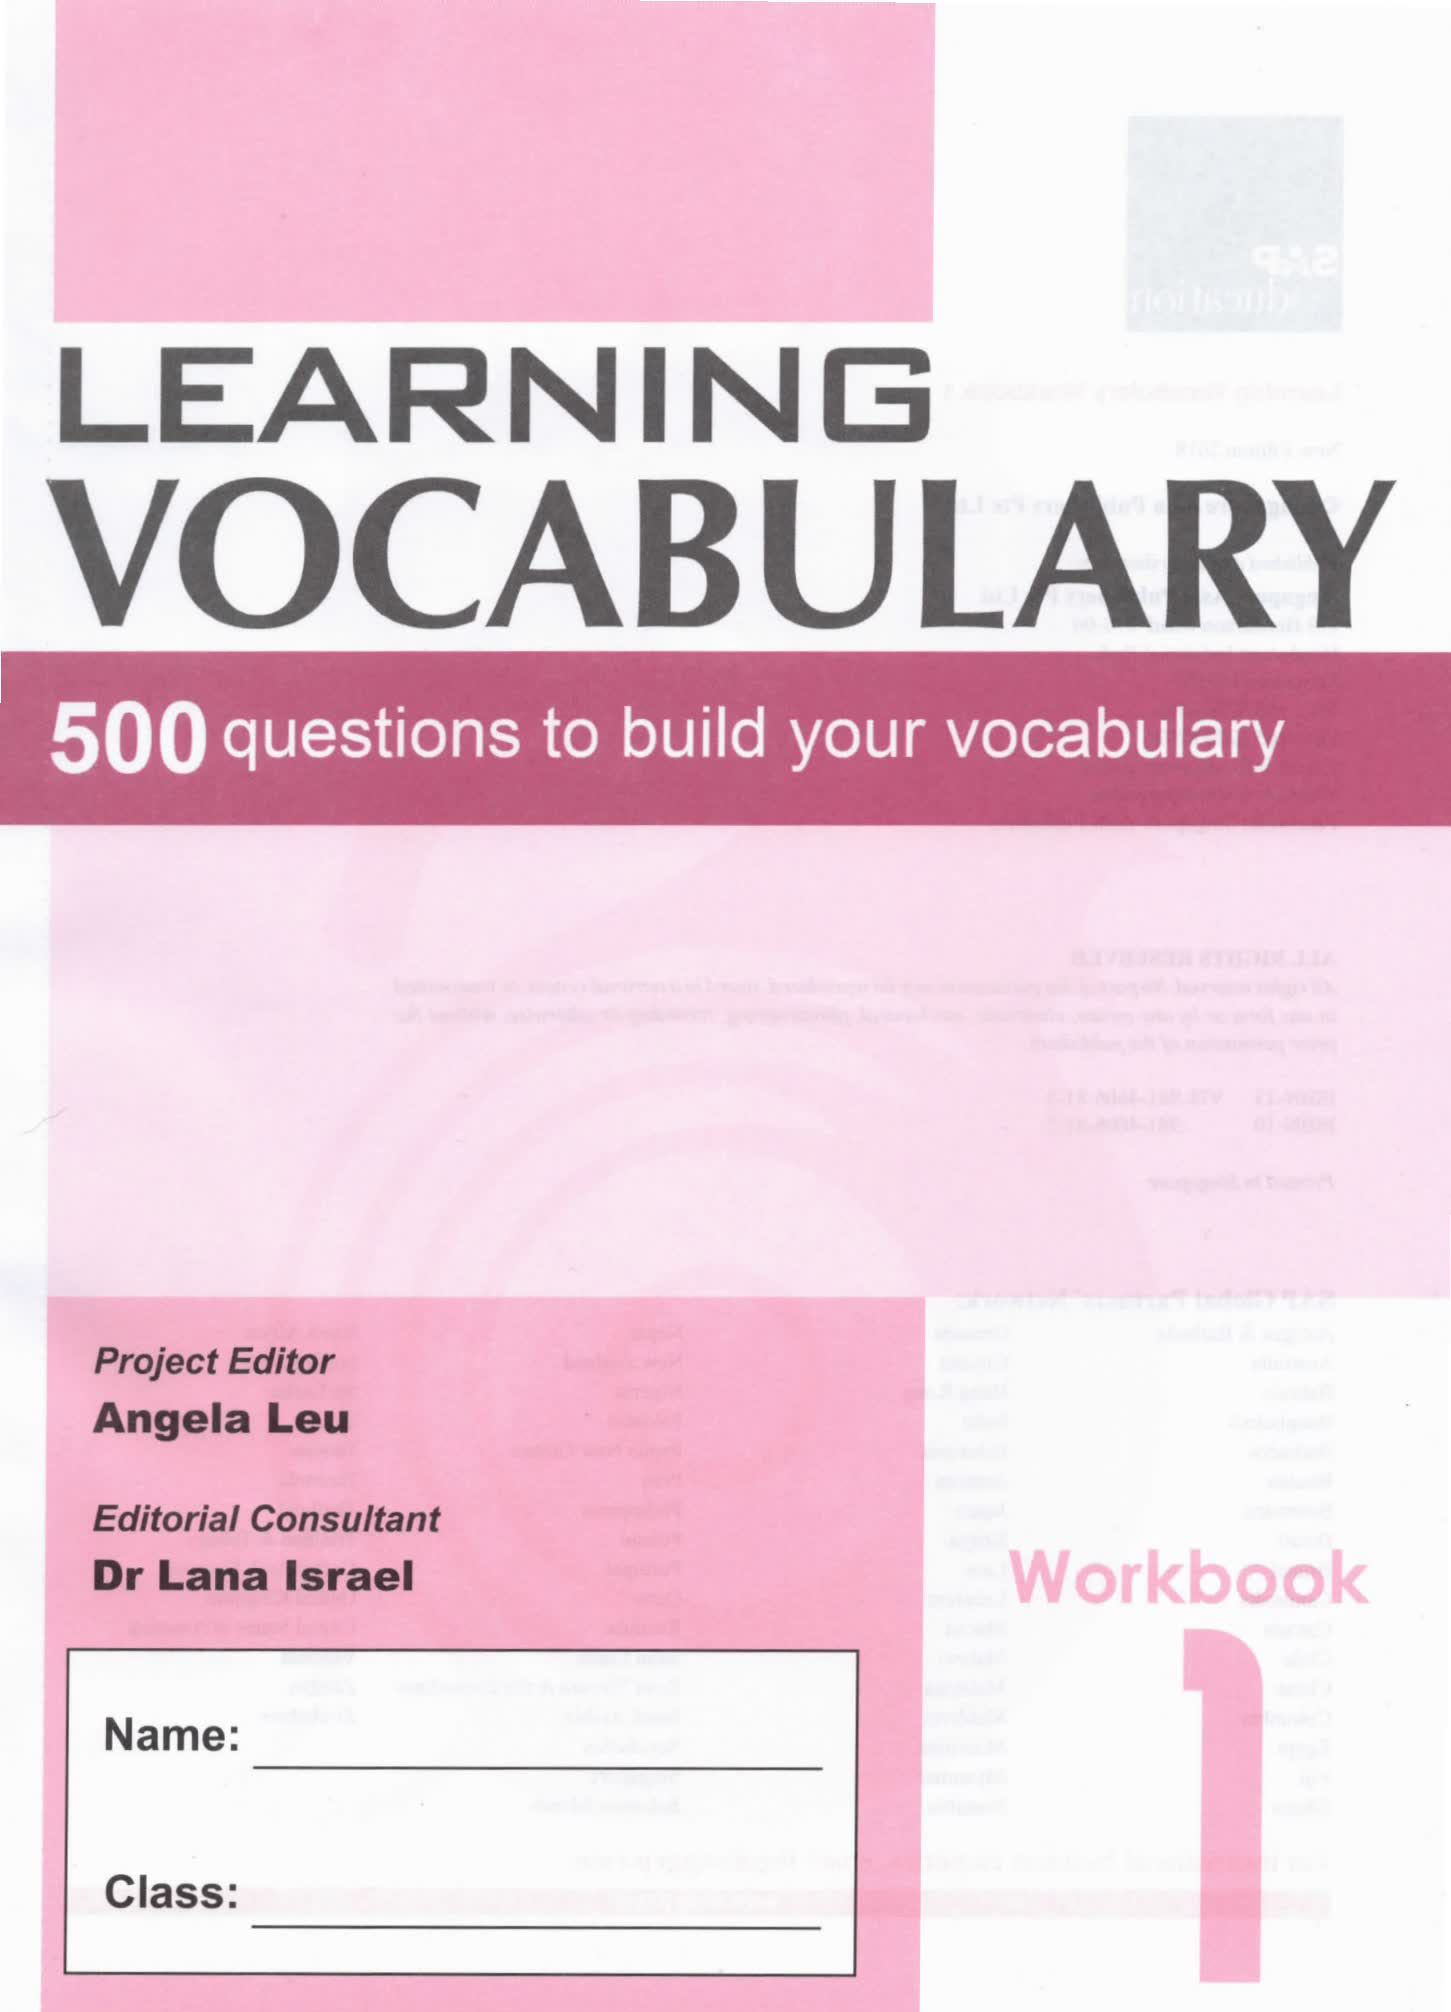 learning-vocabulary-workbook